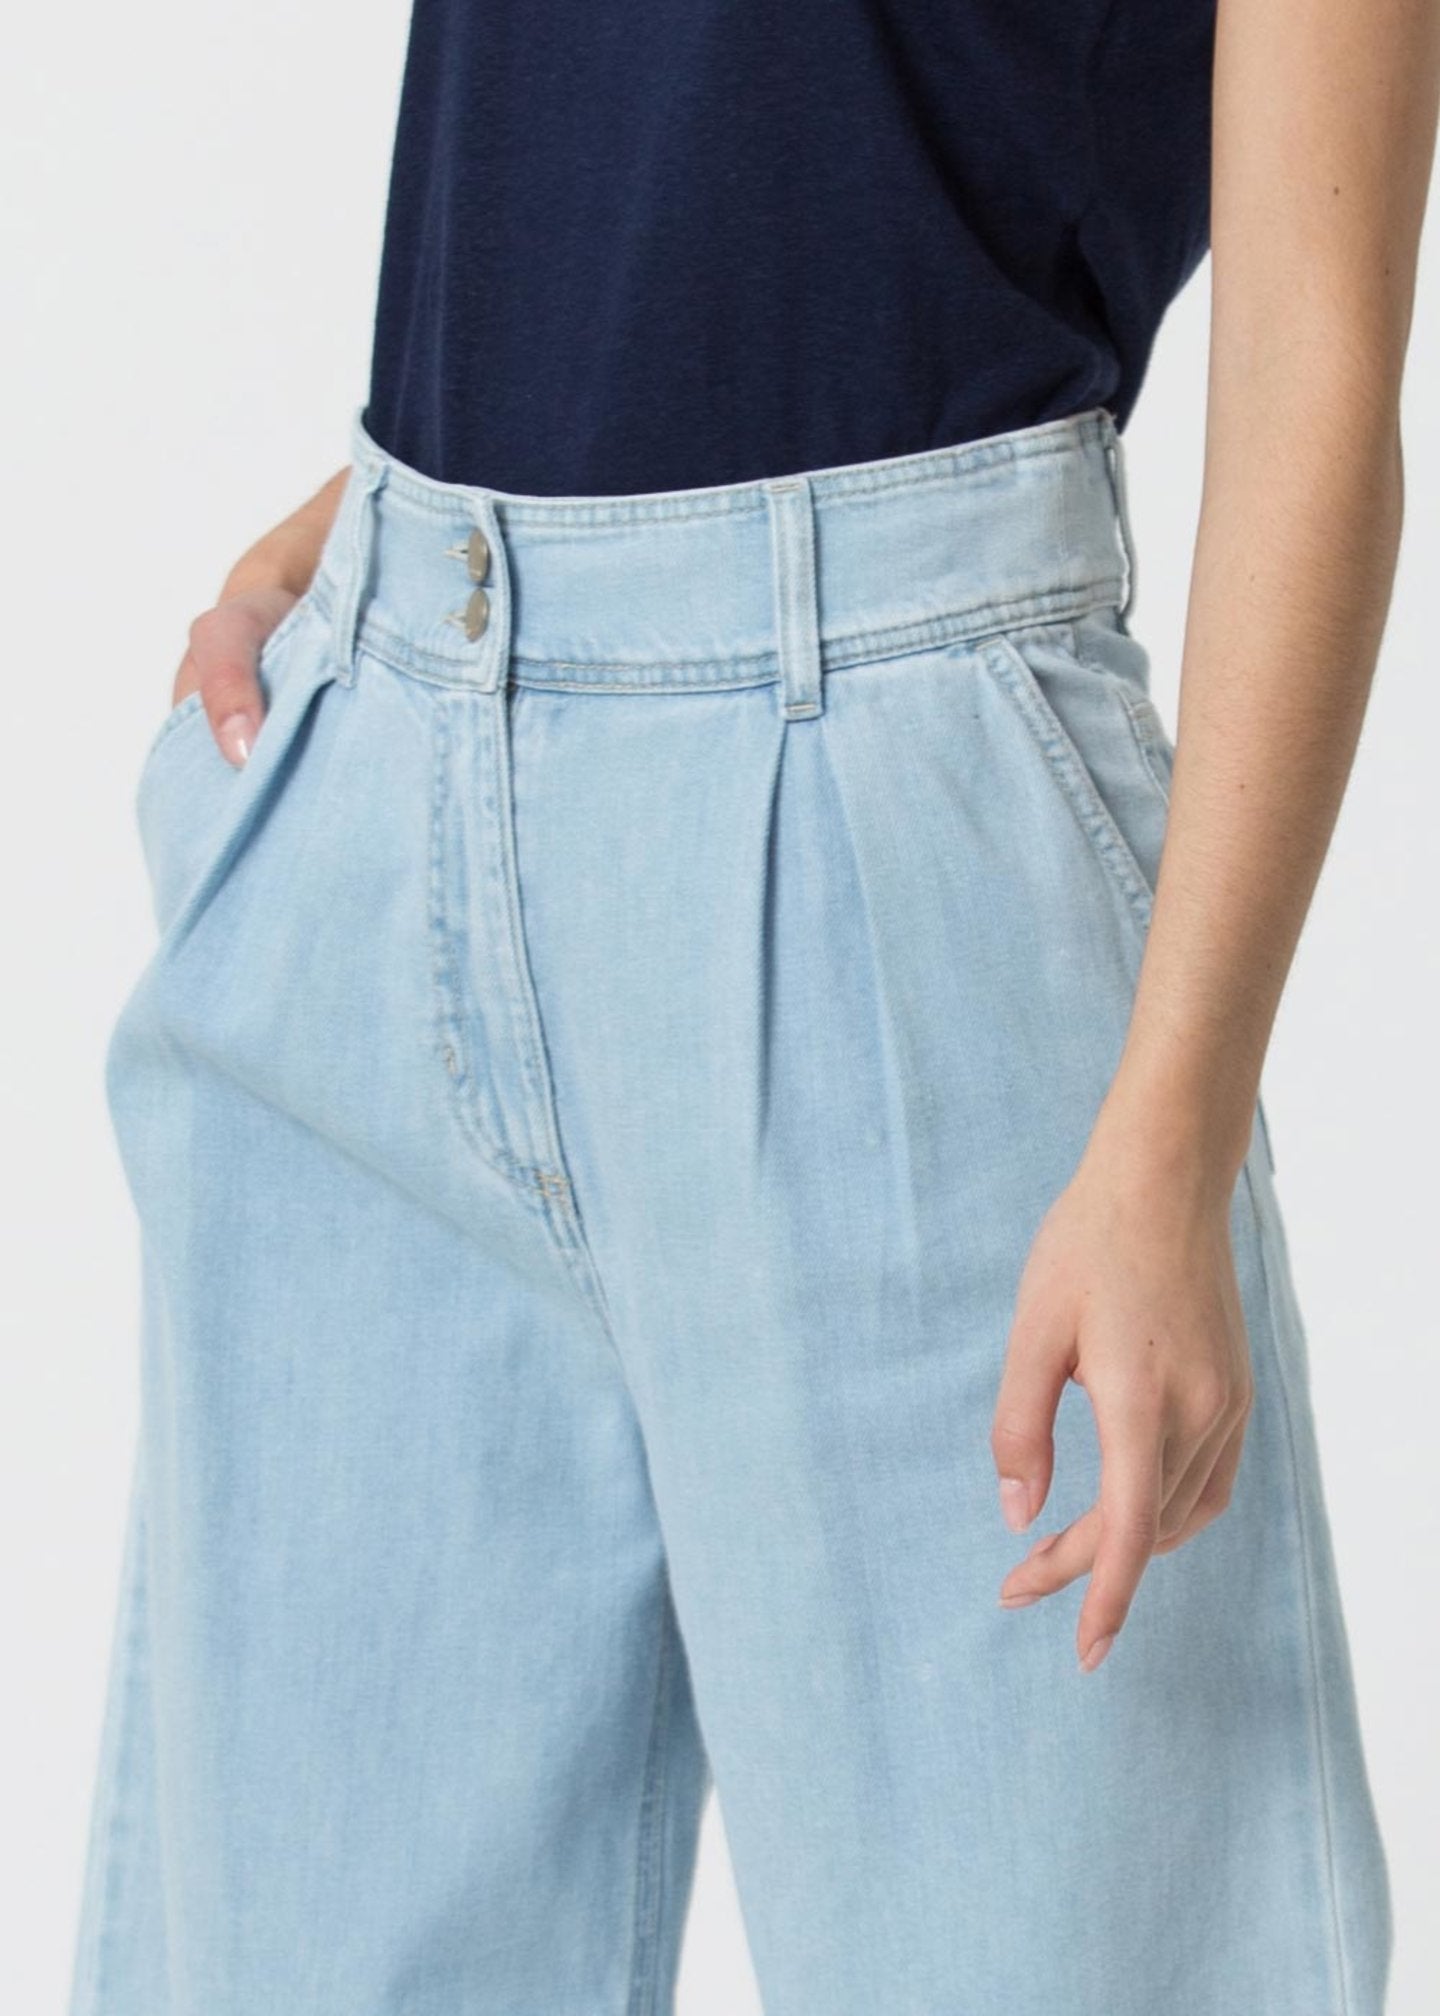 Jeans Kocca Corto / Jeans - Ideal Moda